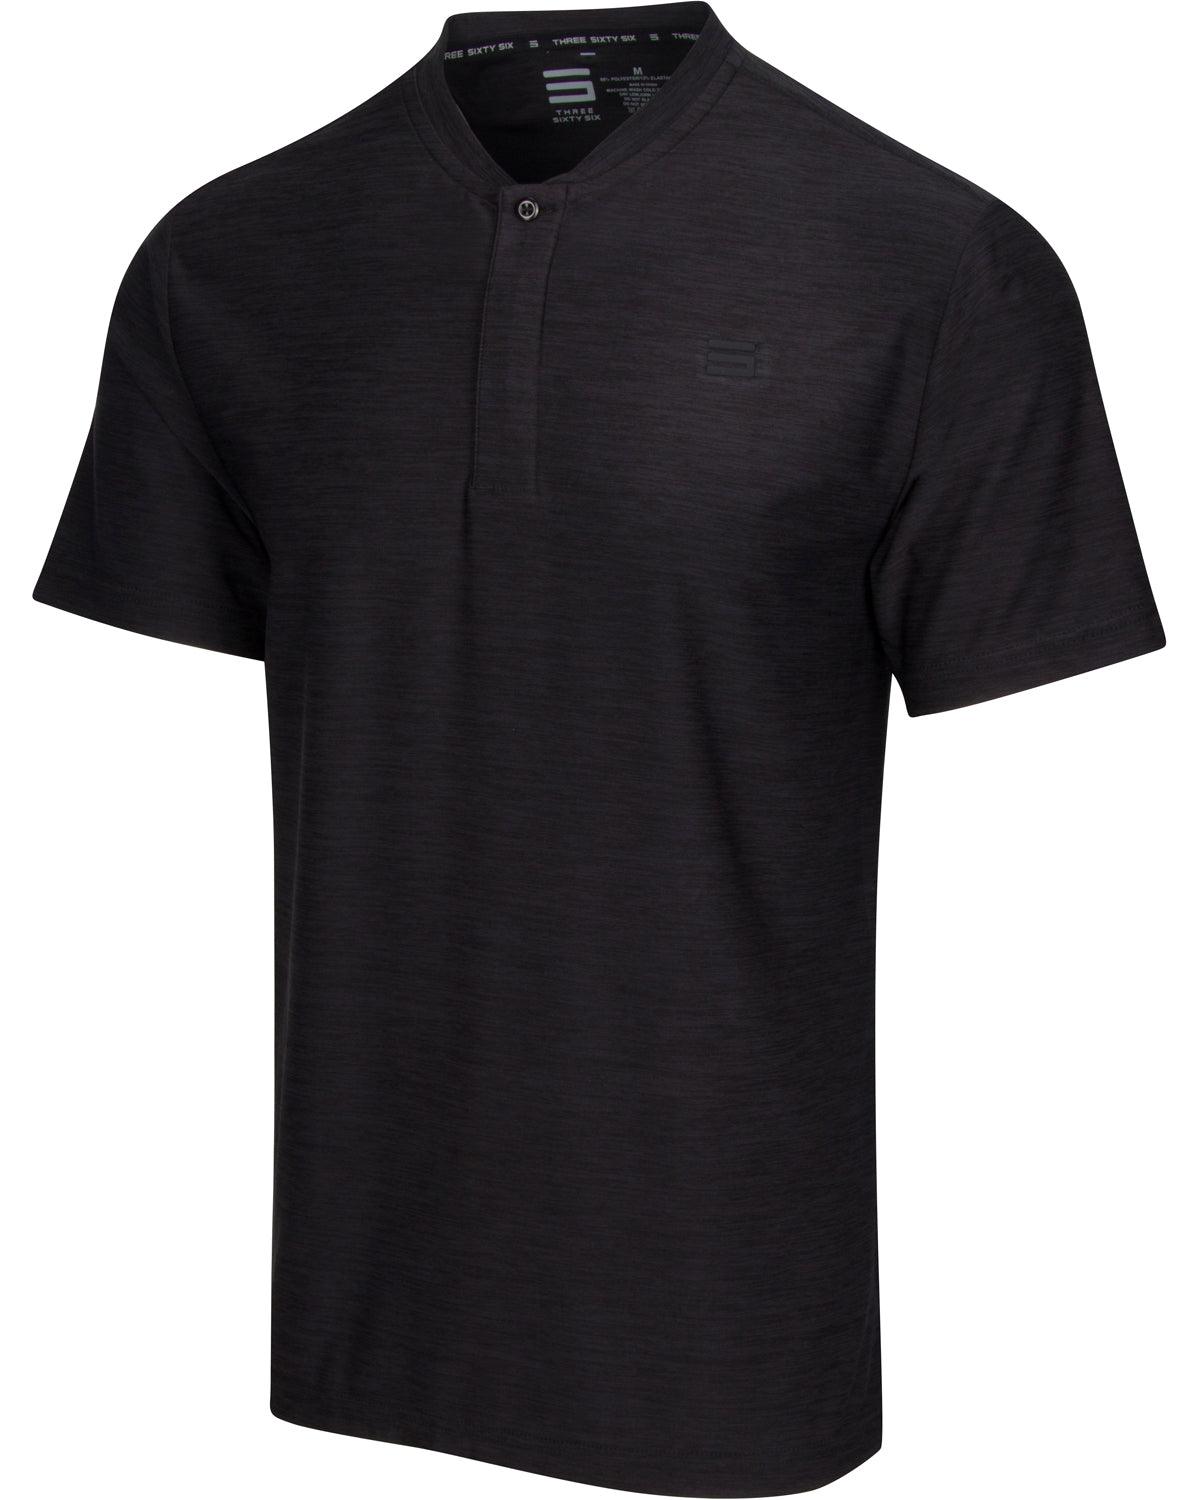 Three Sixty Six Collarless Golf Shirts for Men - Quick Dry Short Sleev